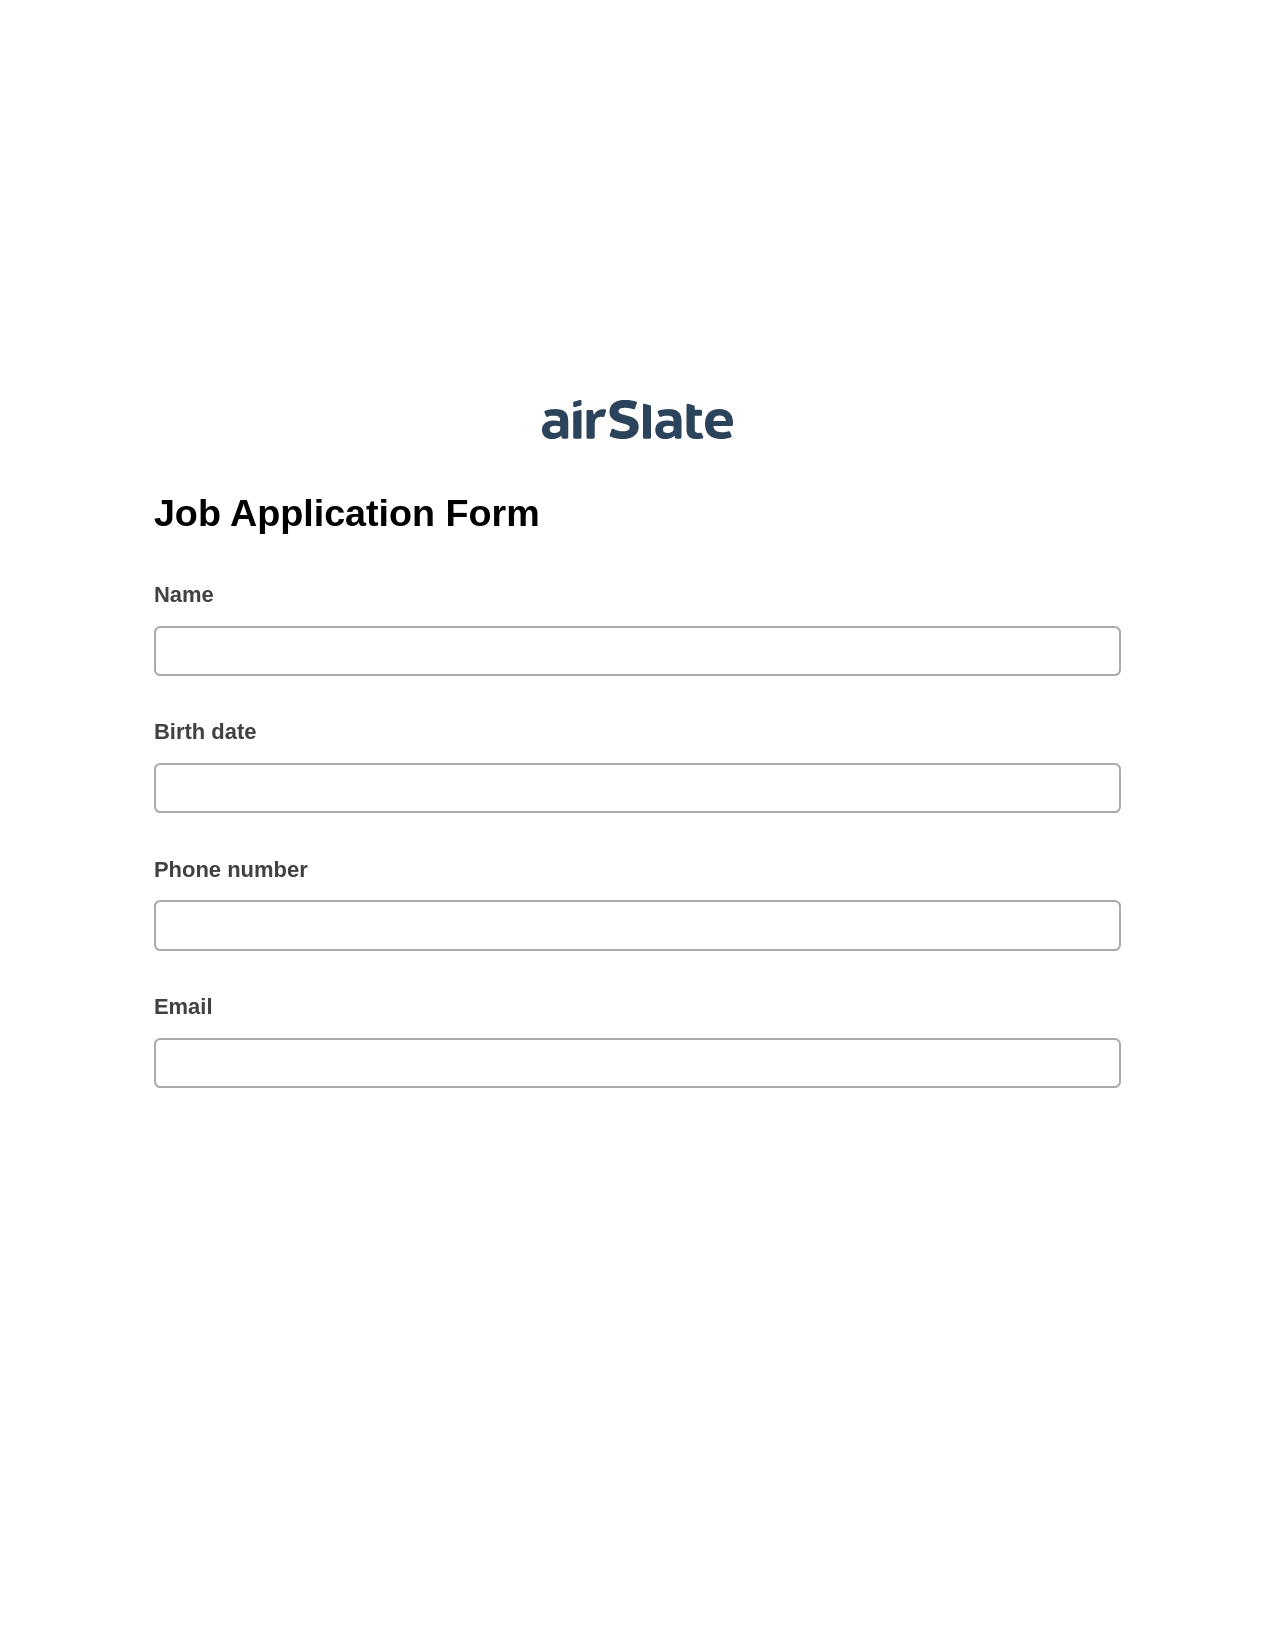 Job Application Form Pre-fill Slate from MS Dynamics 365 Records Bot, Audit Trail Bot, Box Bot